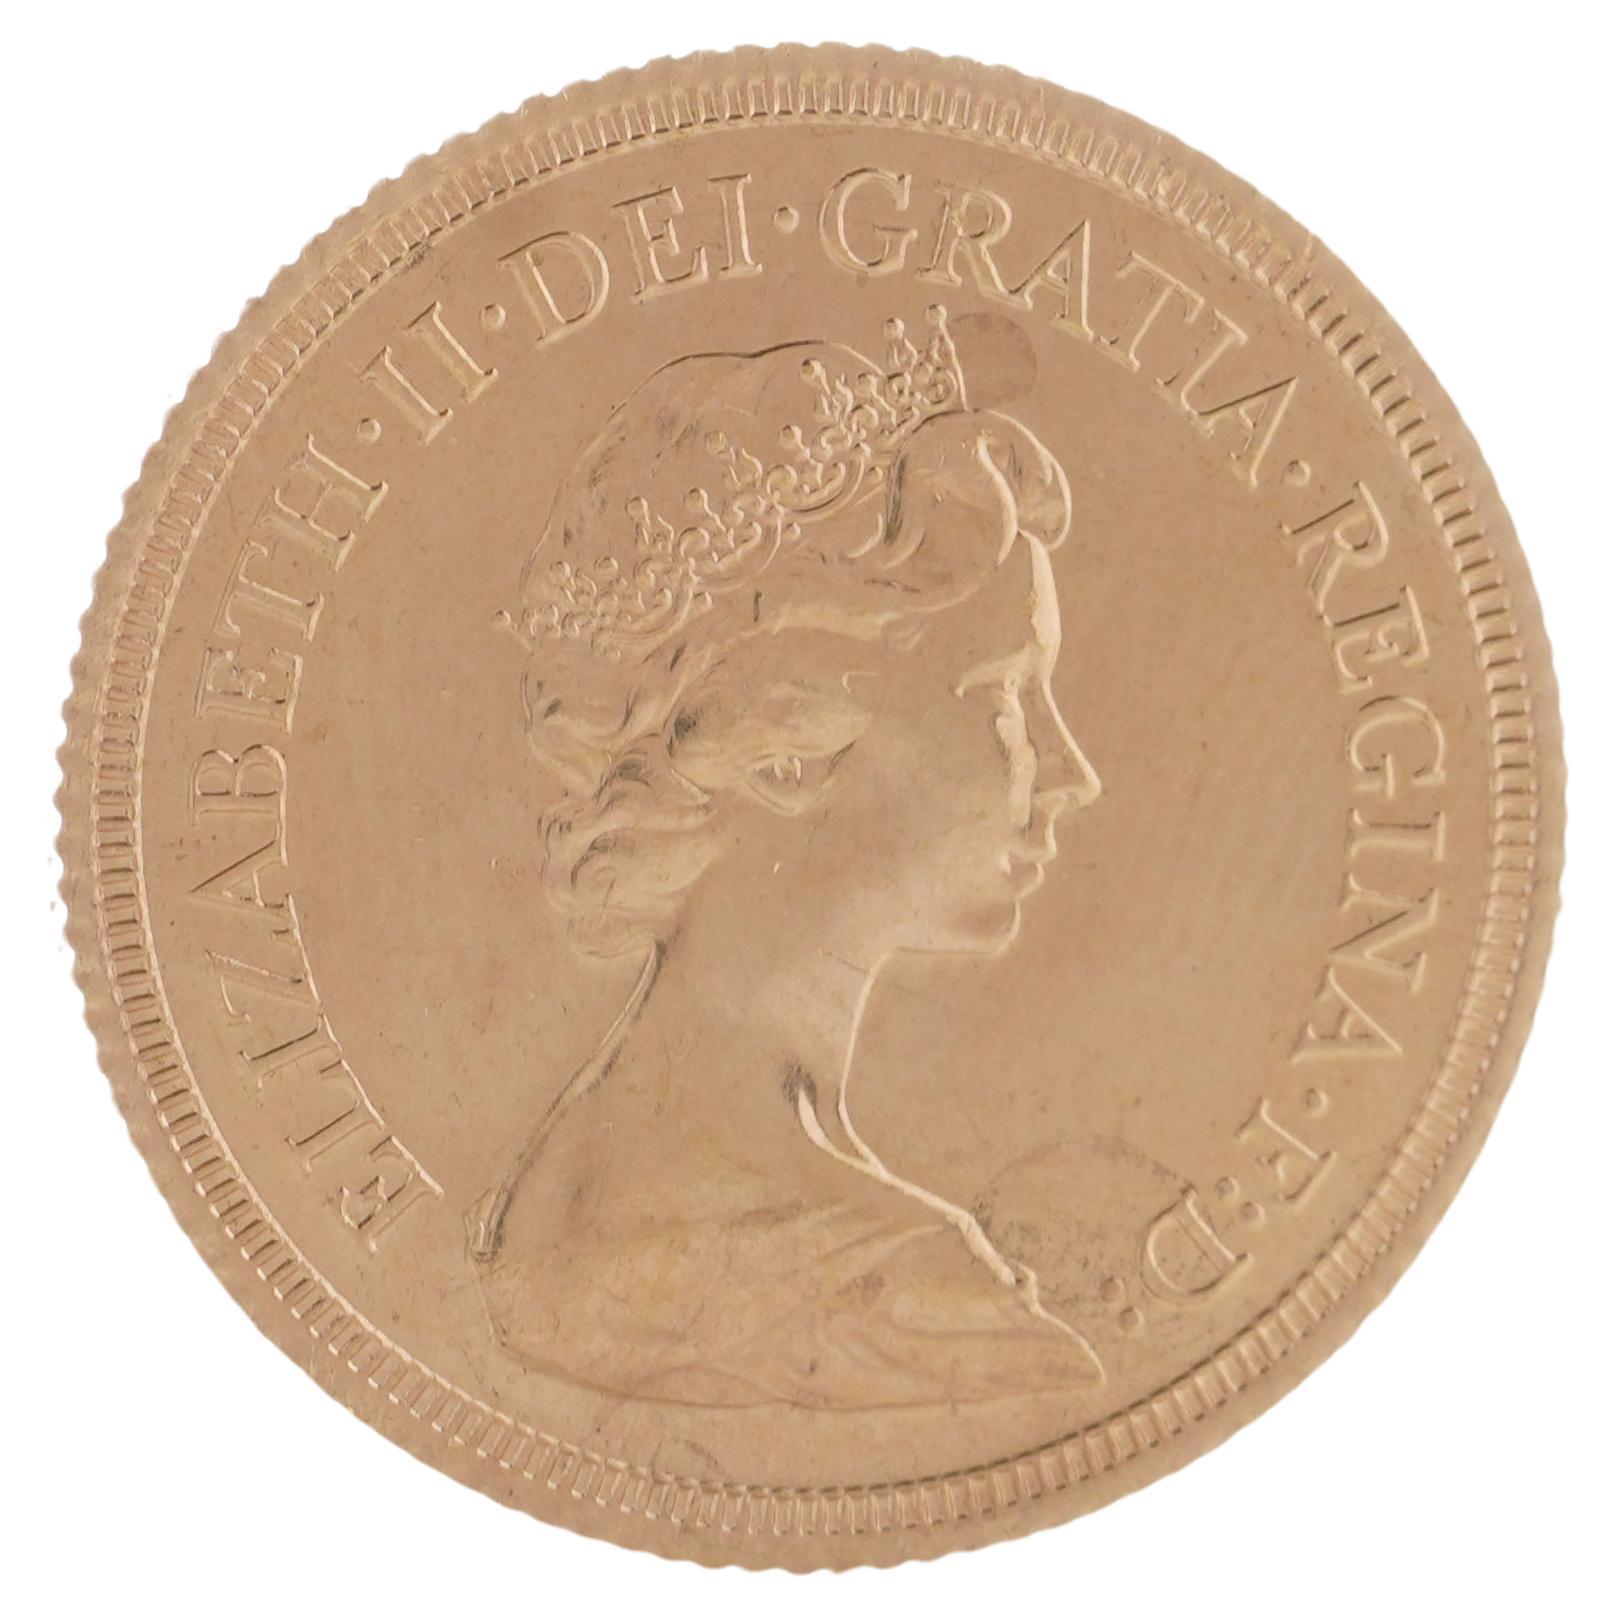 1979 Gold Sovereign - Elizabeth II Decimal Portrait